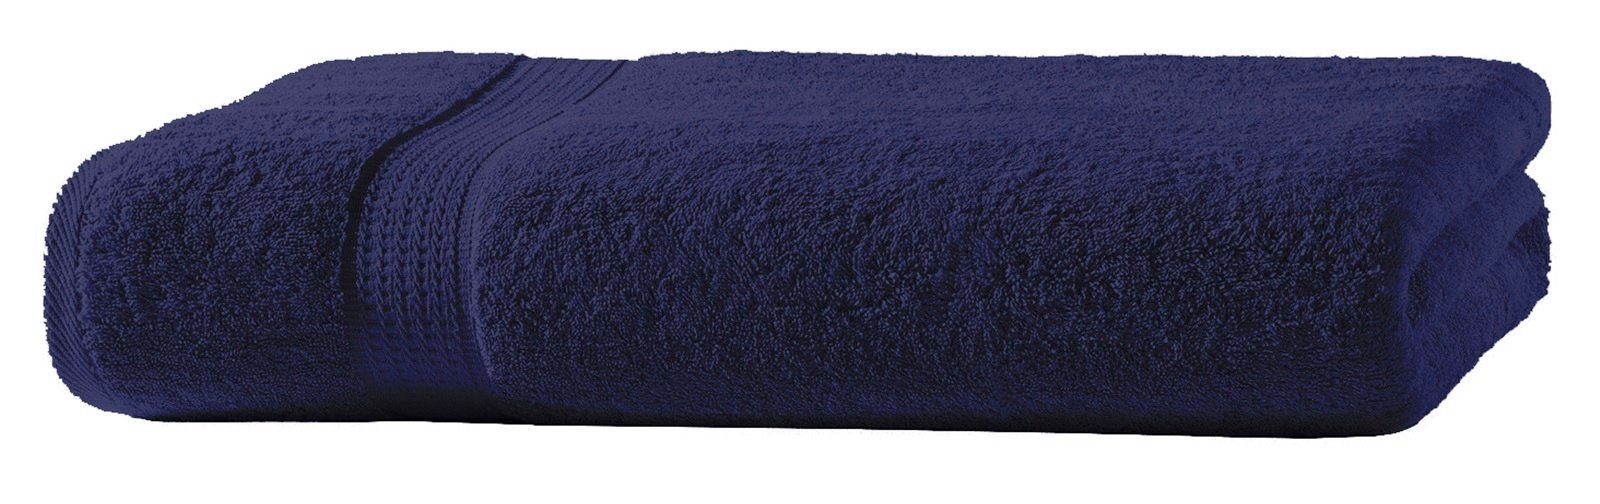 One Home Badetuch Royal, Frottee (1-St), mit Bordüre, saugfähig dunkelblau | Badetücher